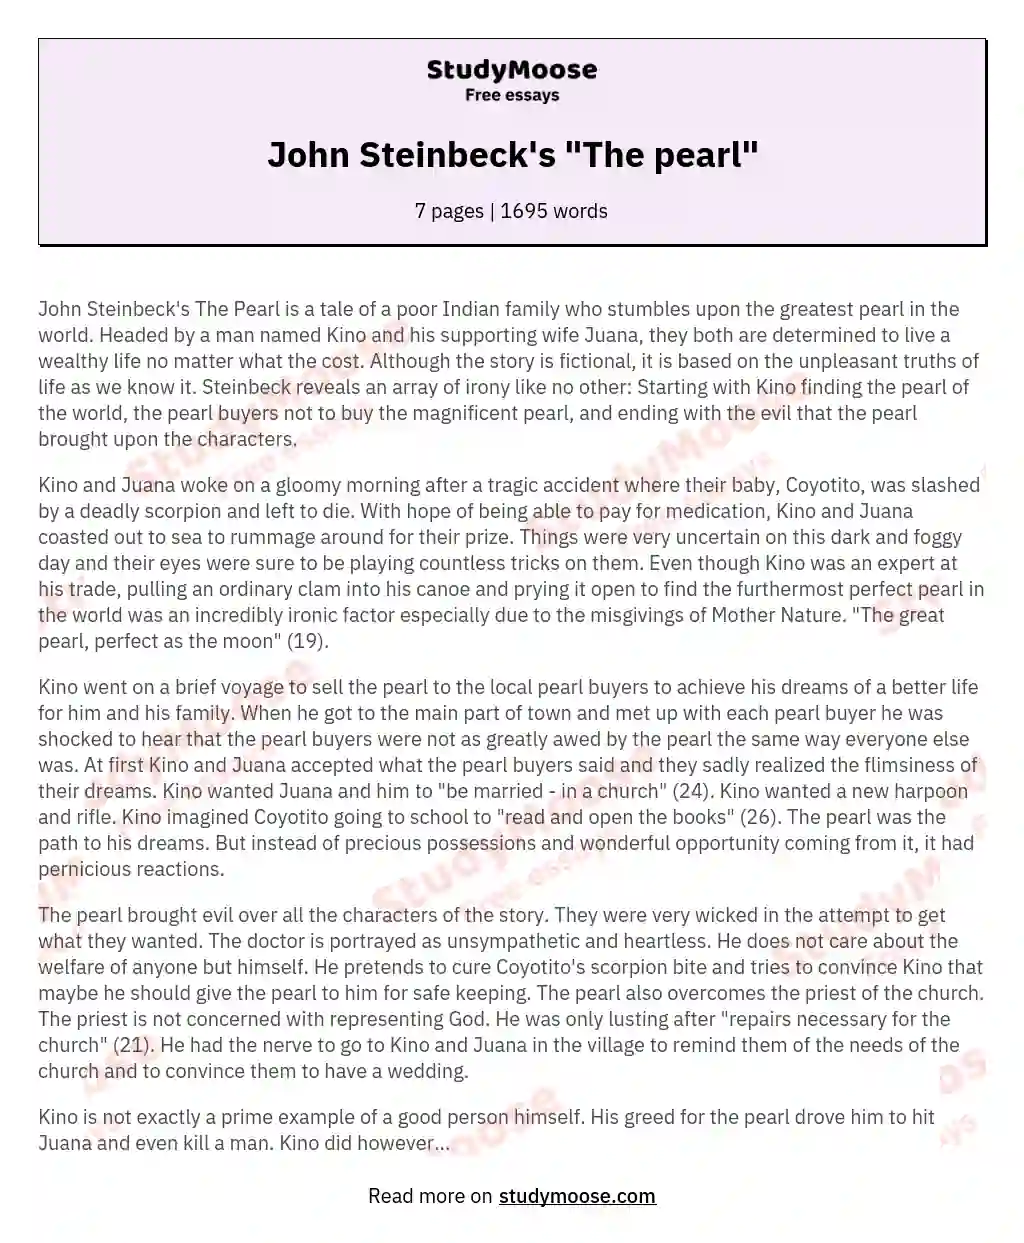 John Steinbeck's "The pearl" essay